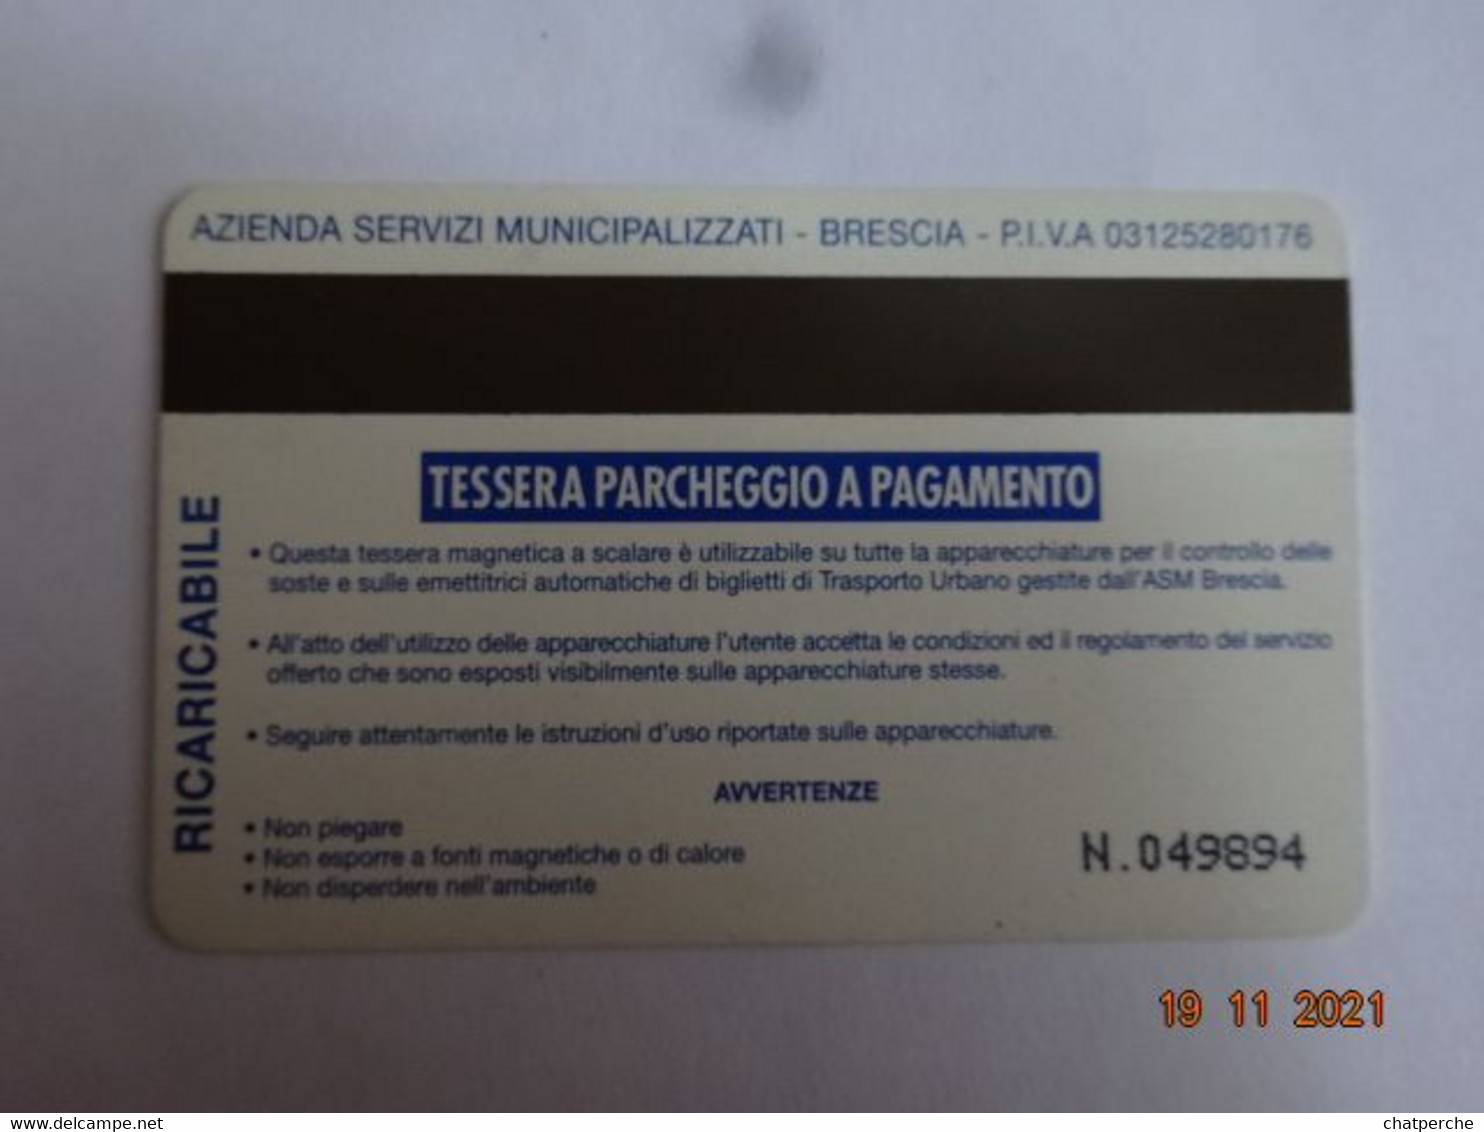 ITALIE ITALIA CARTE STATIONNEMENT BANDE MAGNÉTIQUE PARKIBG CARD BRESCIA - [4] Sammlungen